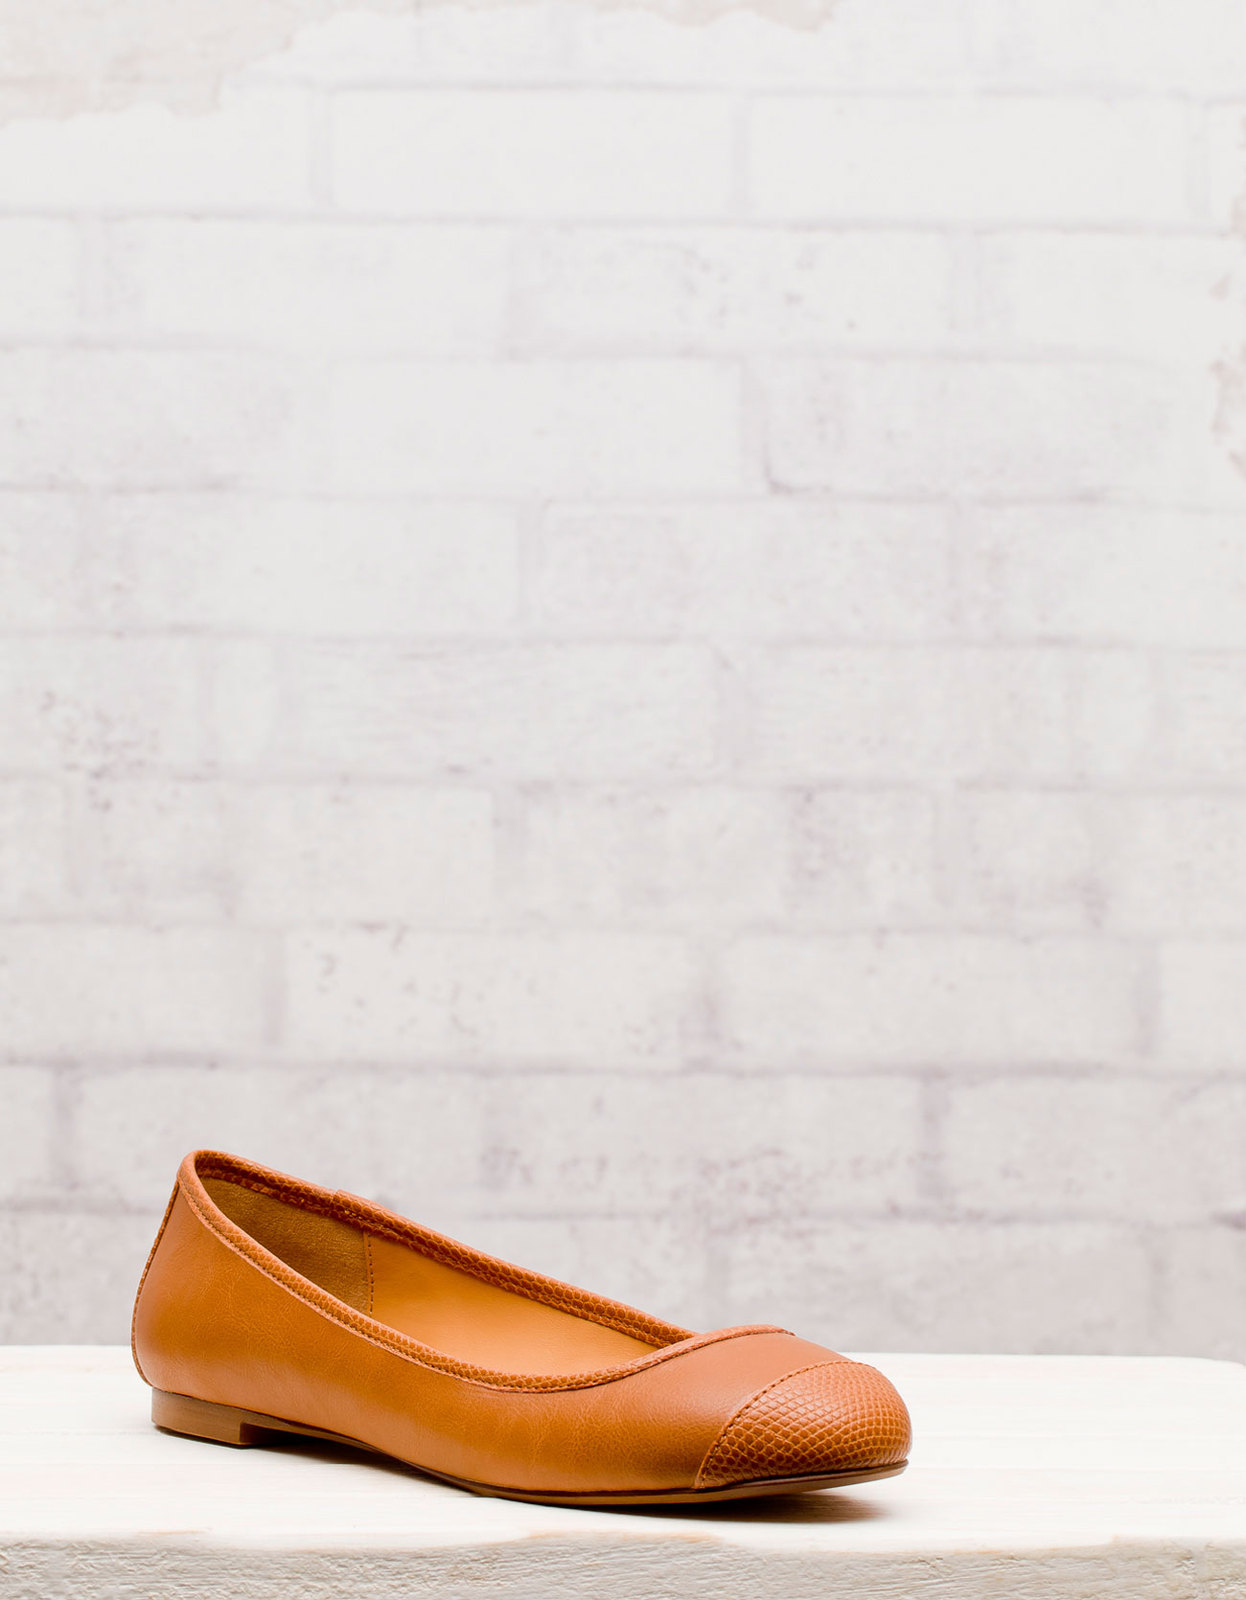 Stradivarius világos barna balerina cipő 2012 fotója